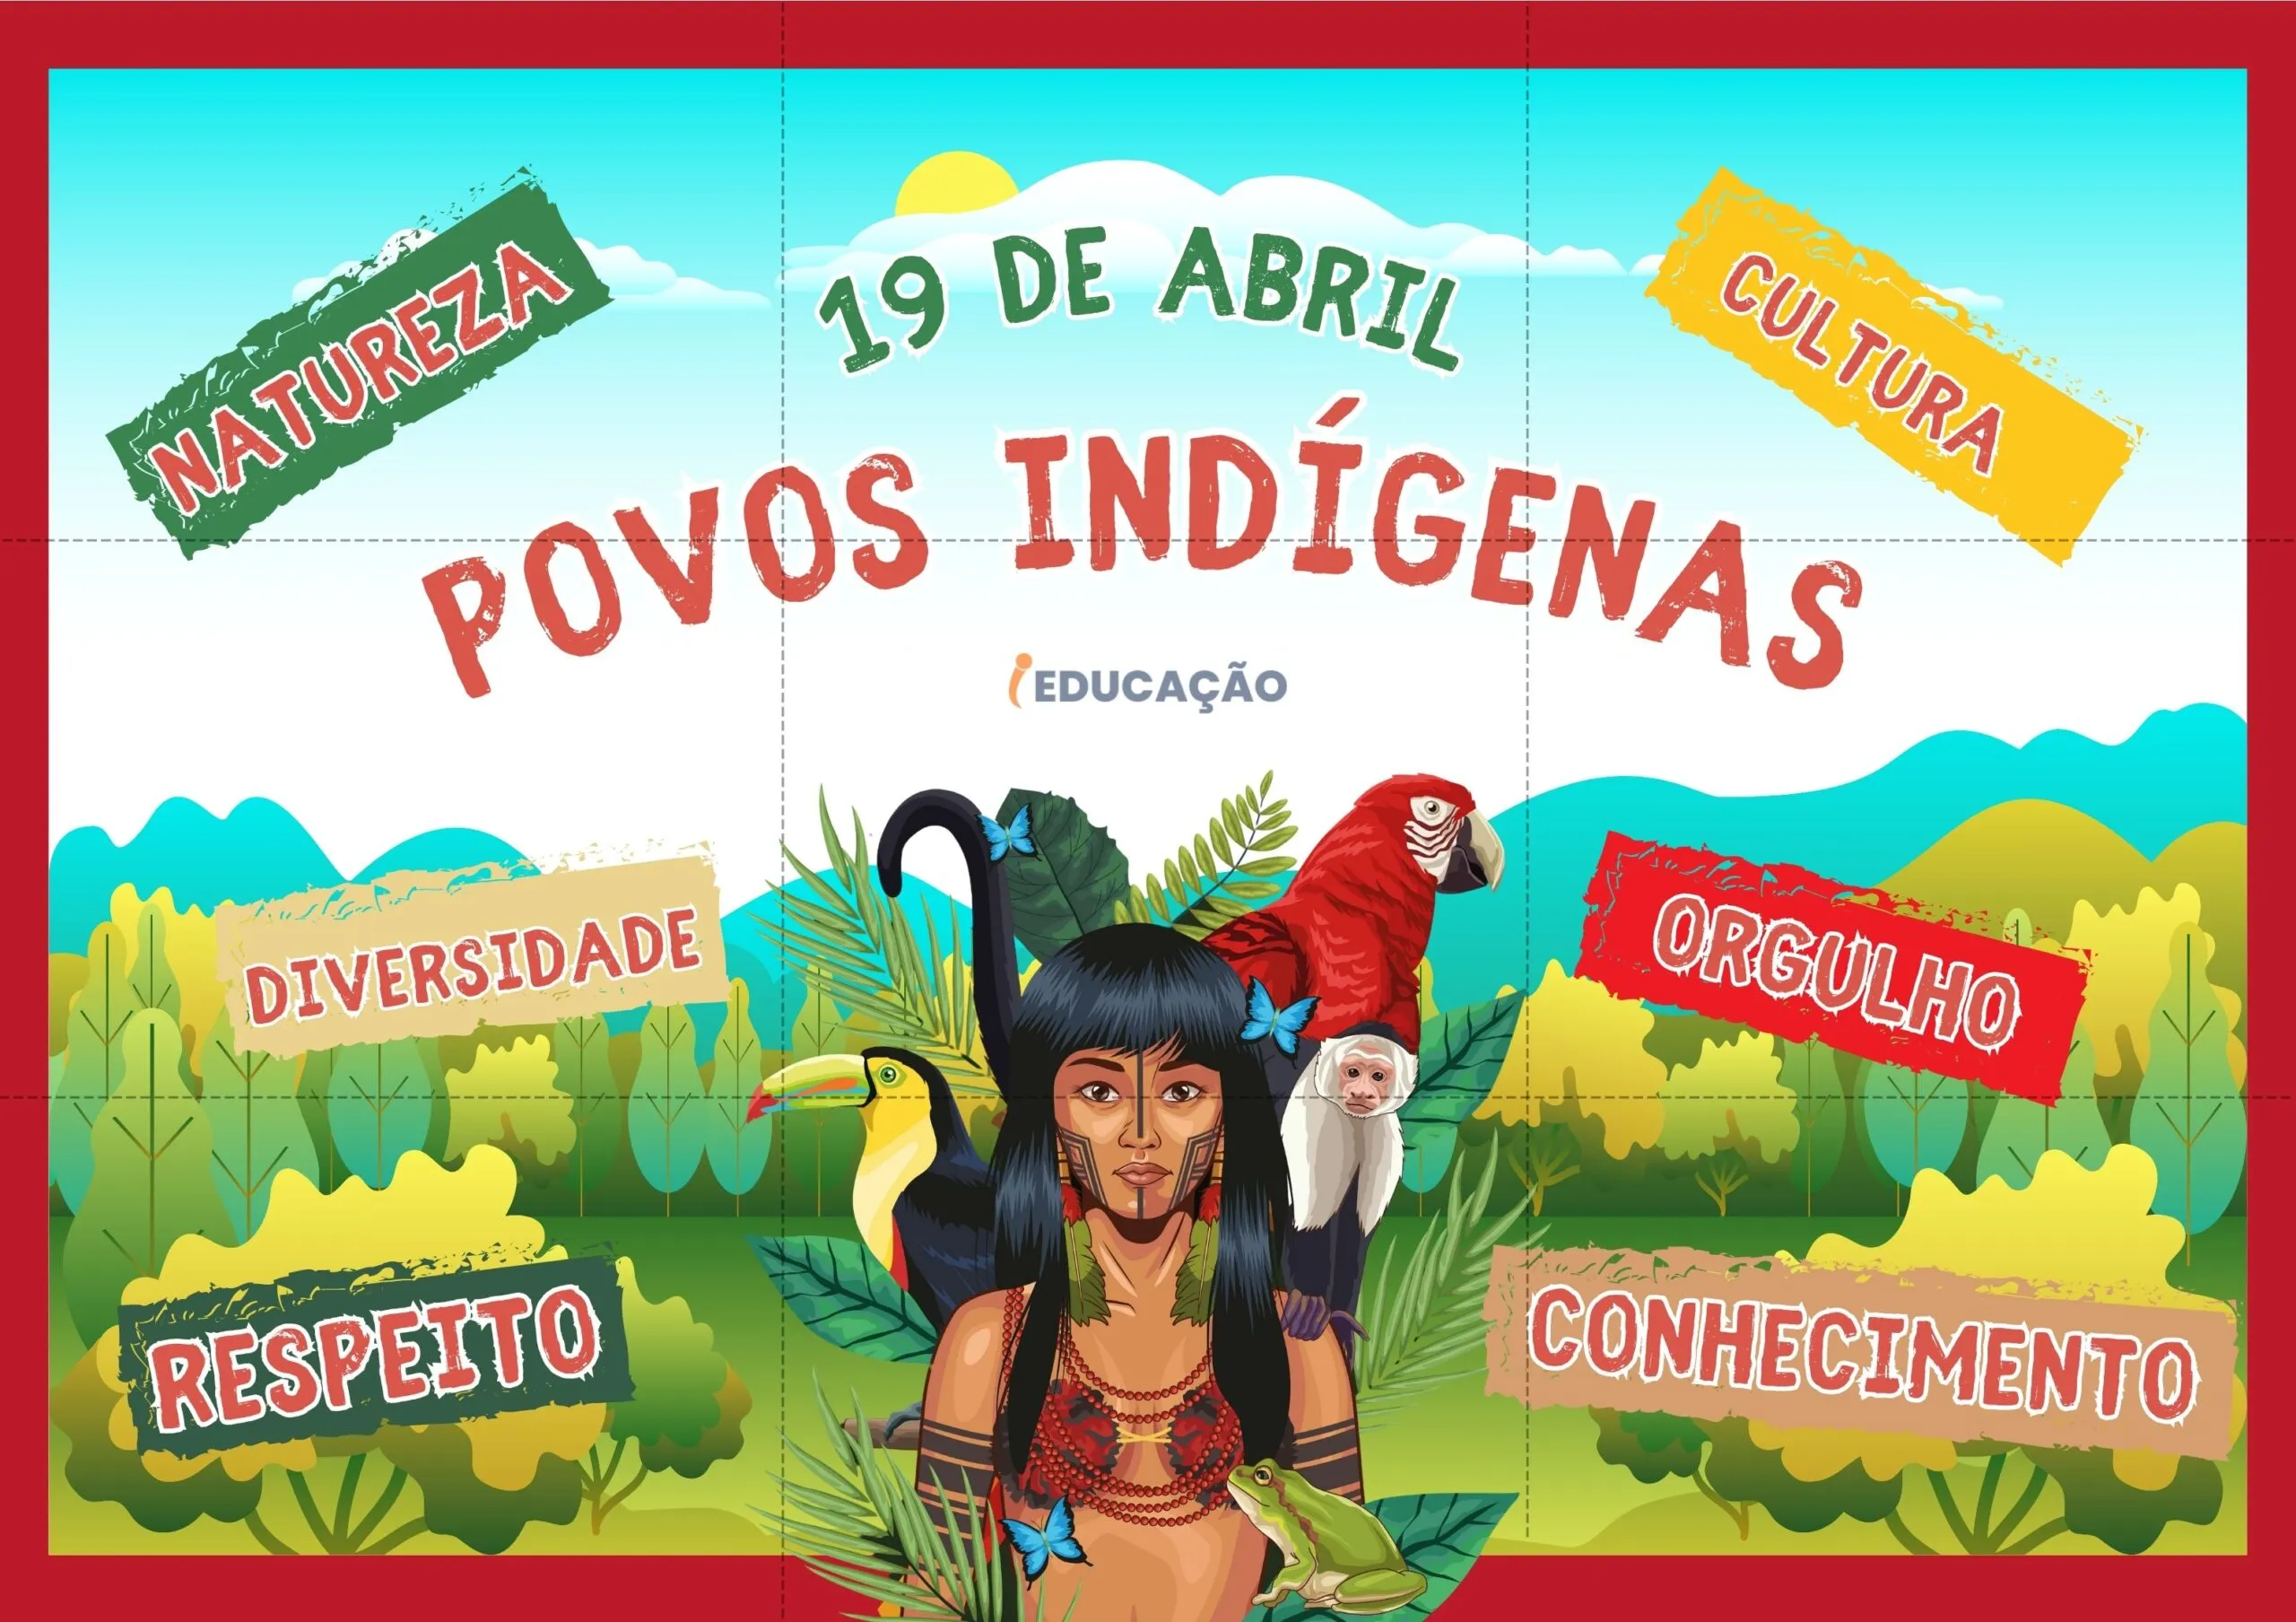 Painel Dia do Índio para imprimir_ Cultura Indígena Brasileira - Painel dos povos indígenas Brasileiros.jpg